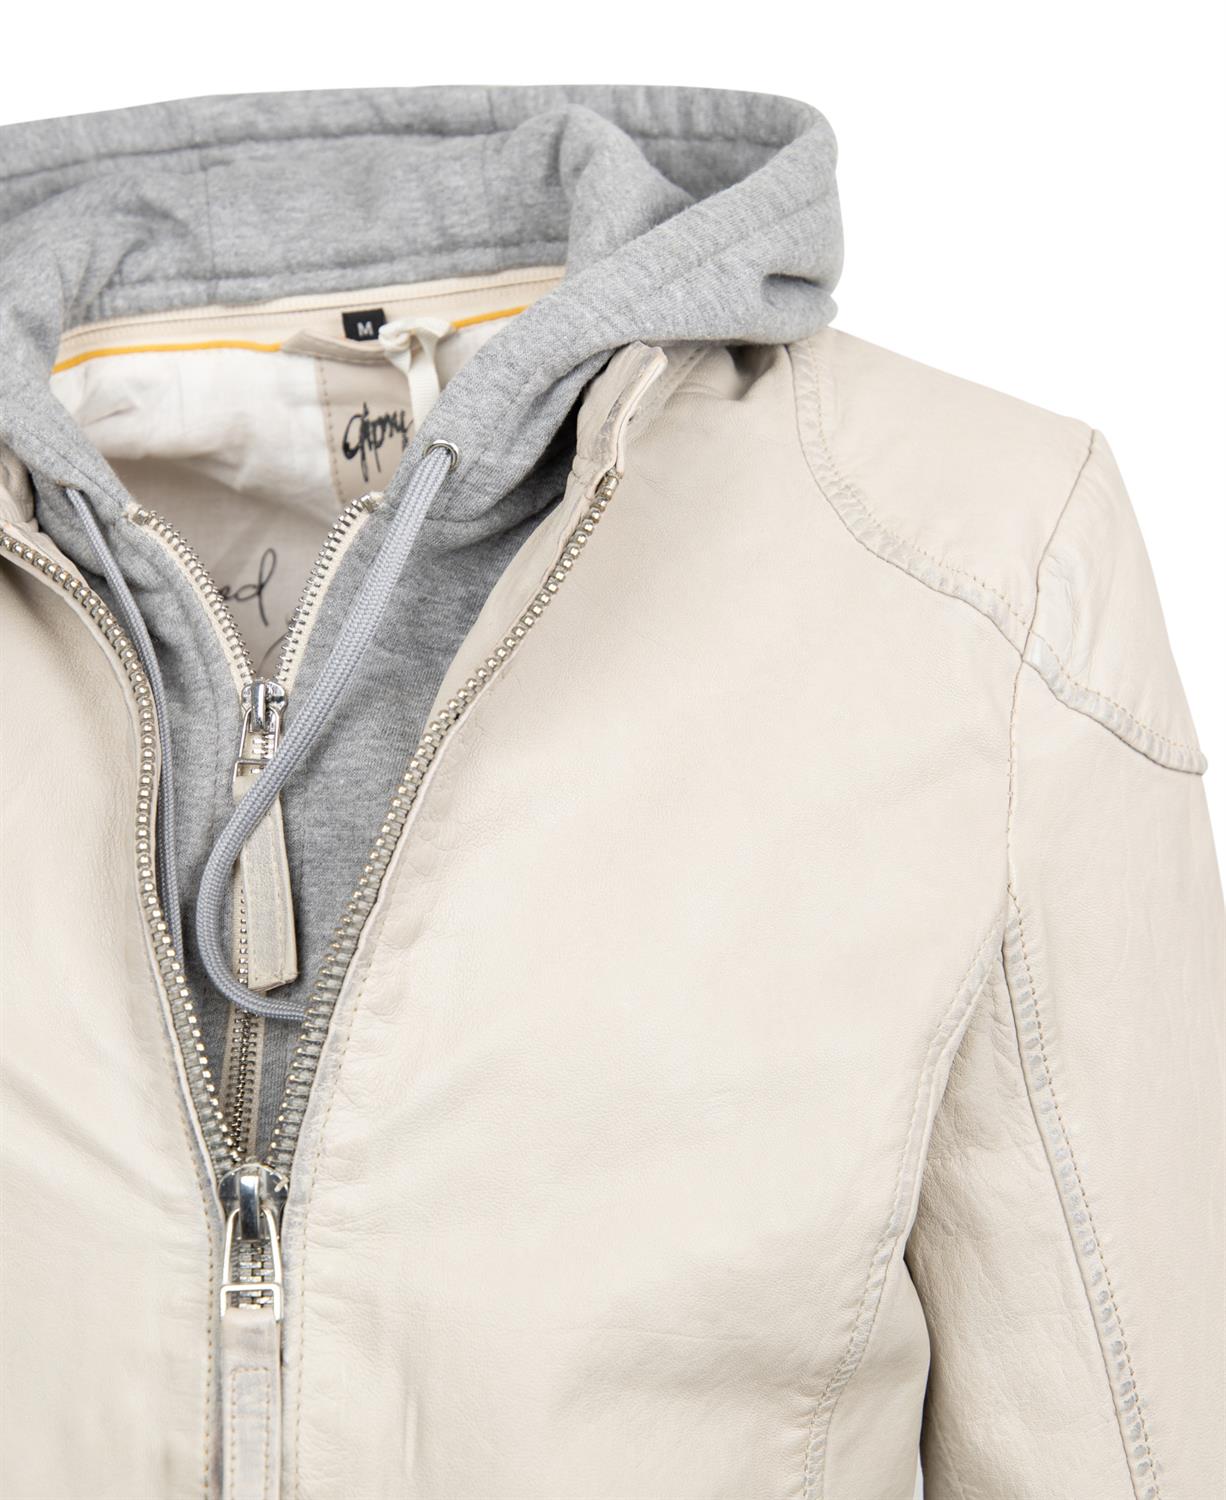 Gipsy Damen Jacke kurz Lederjacke mit abnehmbarer Kapuze beige bequem  online kaufen bei | Übergangsjacken